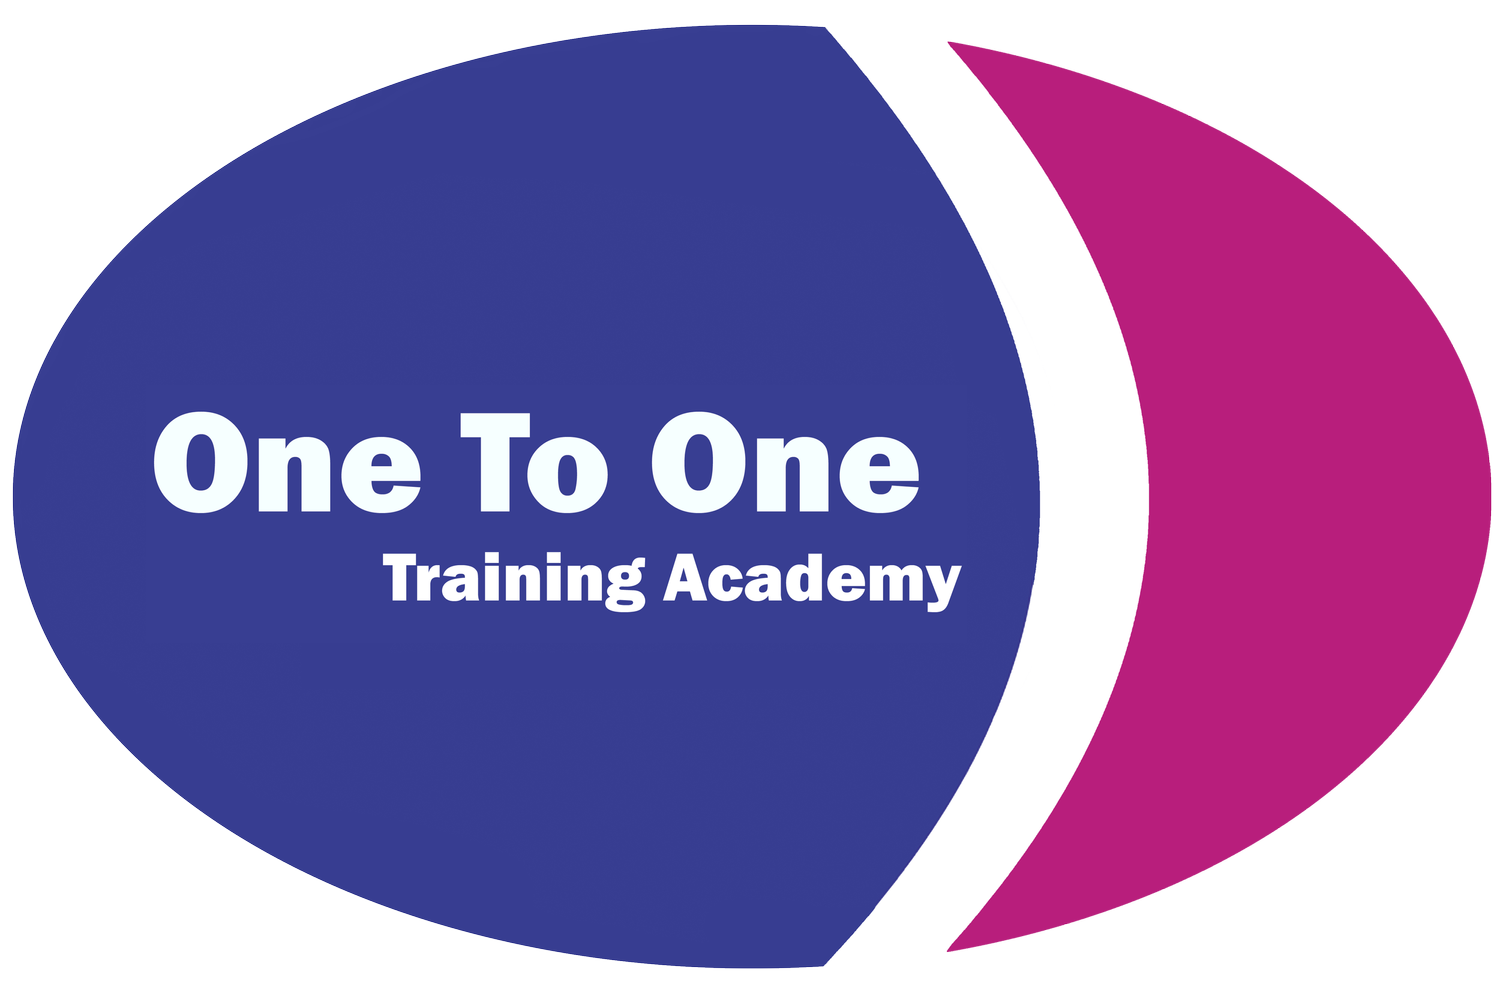 One To One Training Academy logo